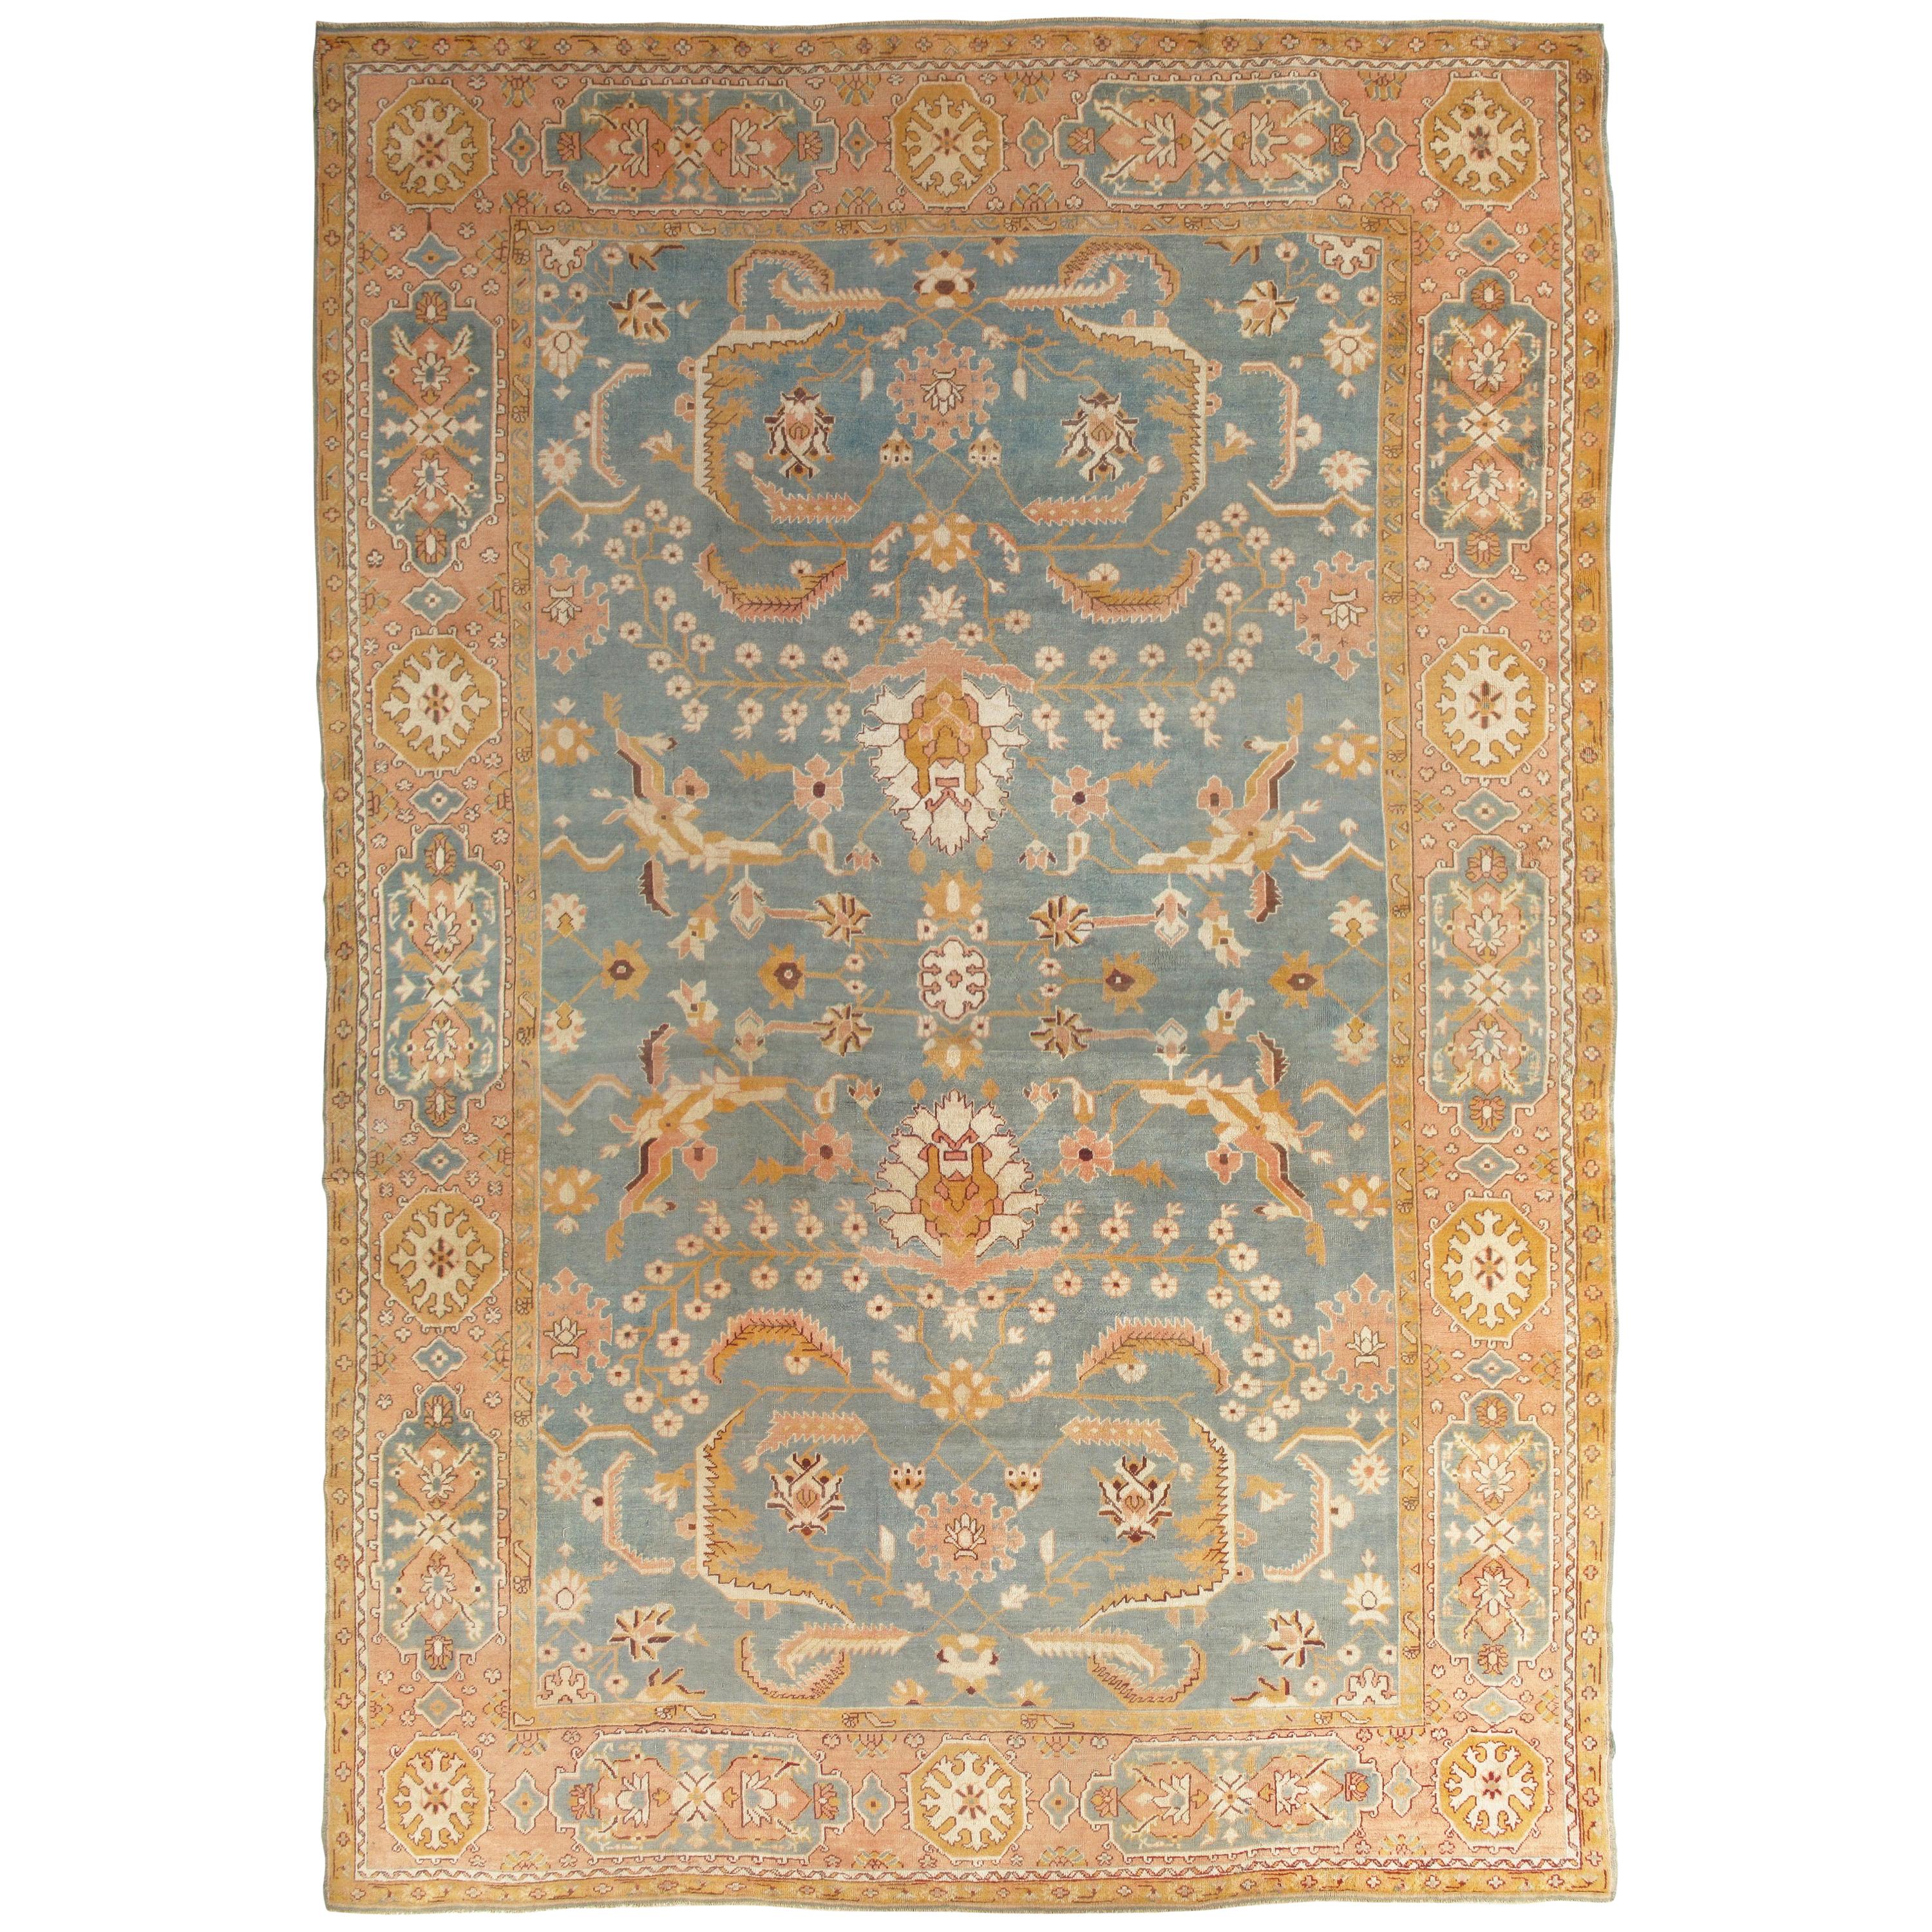 Antique Oushak Carpet, Oriental Rug, Handmade Blue/Grey, Ivory, Peach